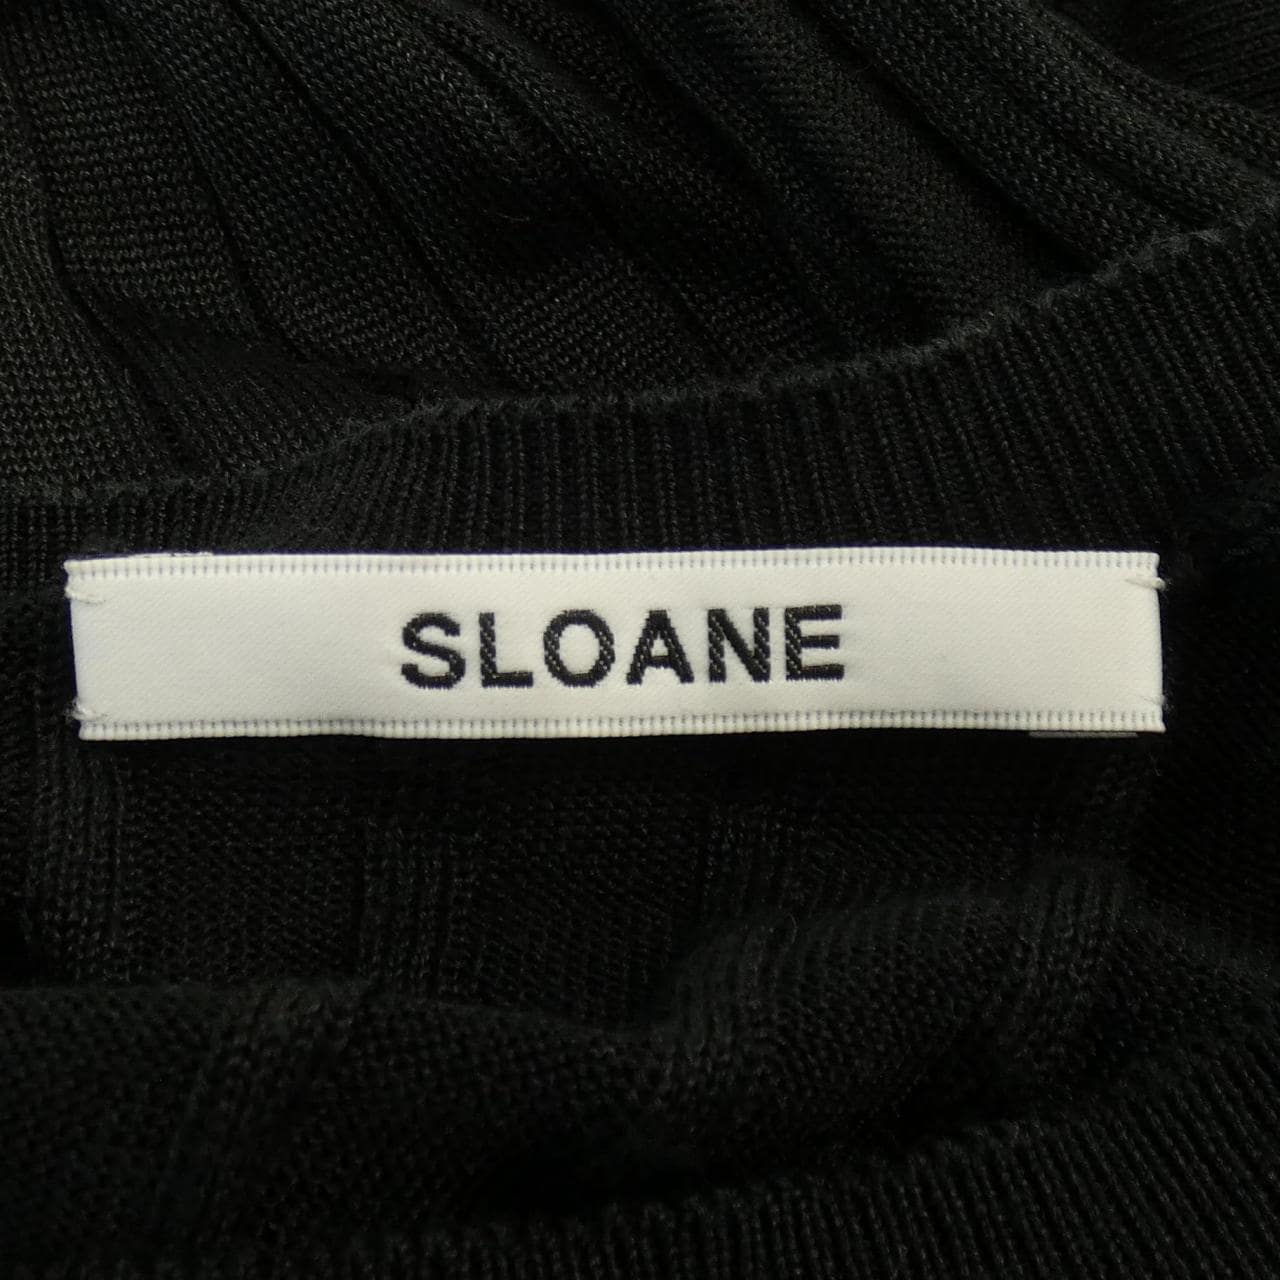 Sloan SLOANE top